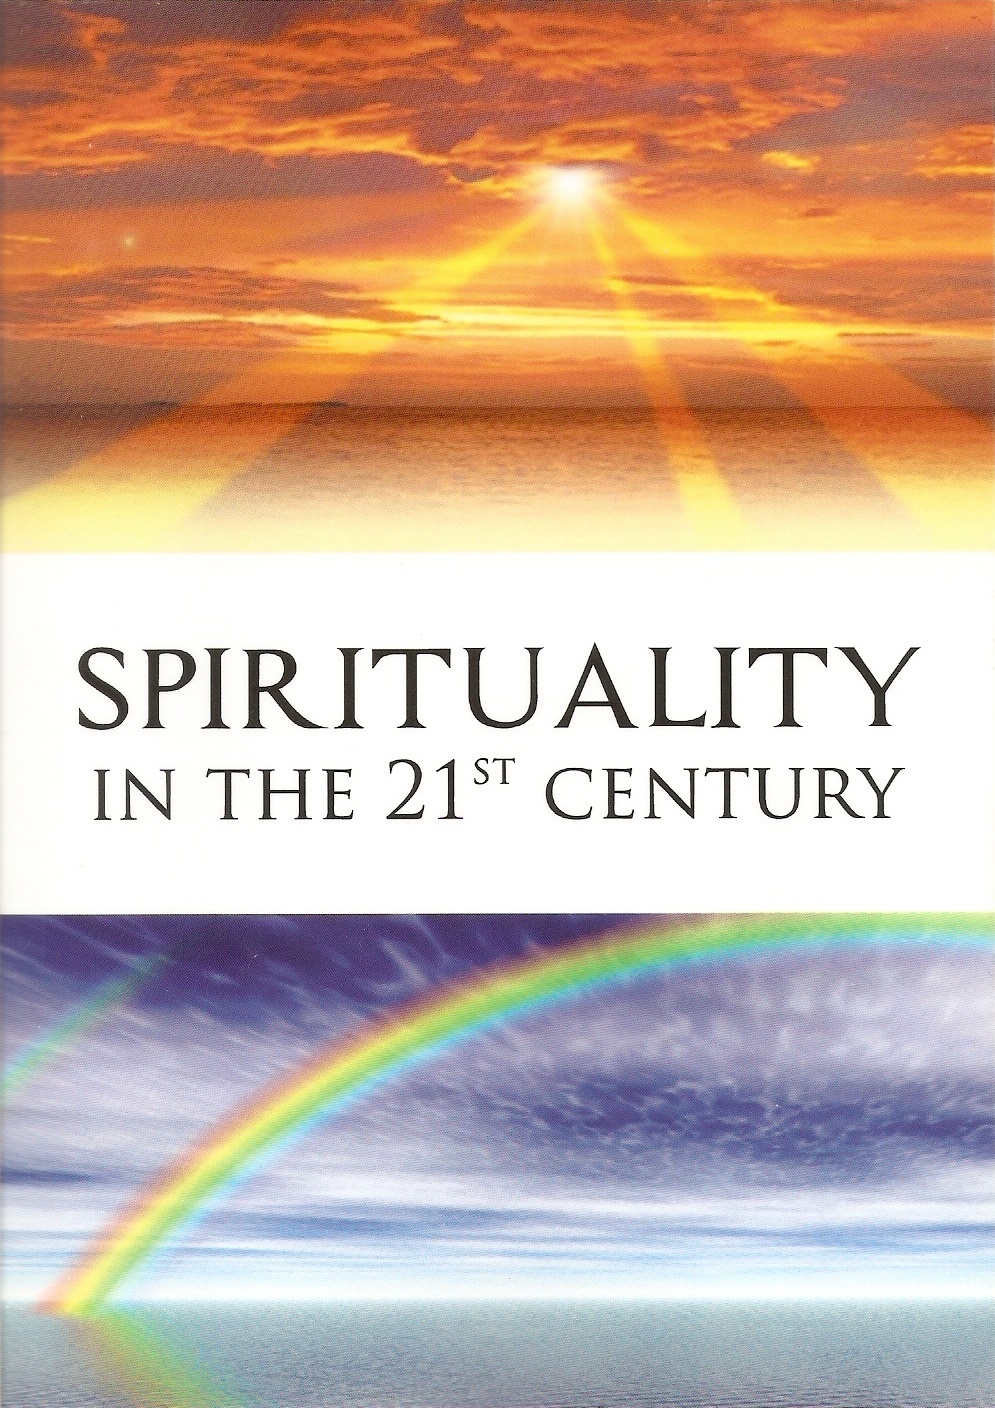 Spirituality in the 21st Century by Frank P. Daversa